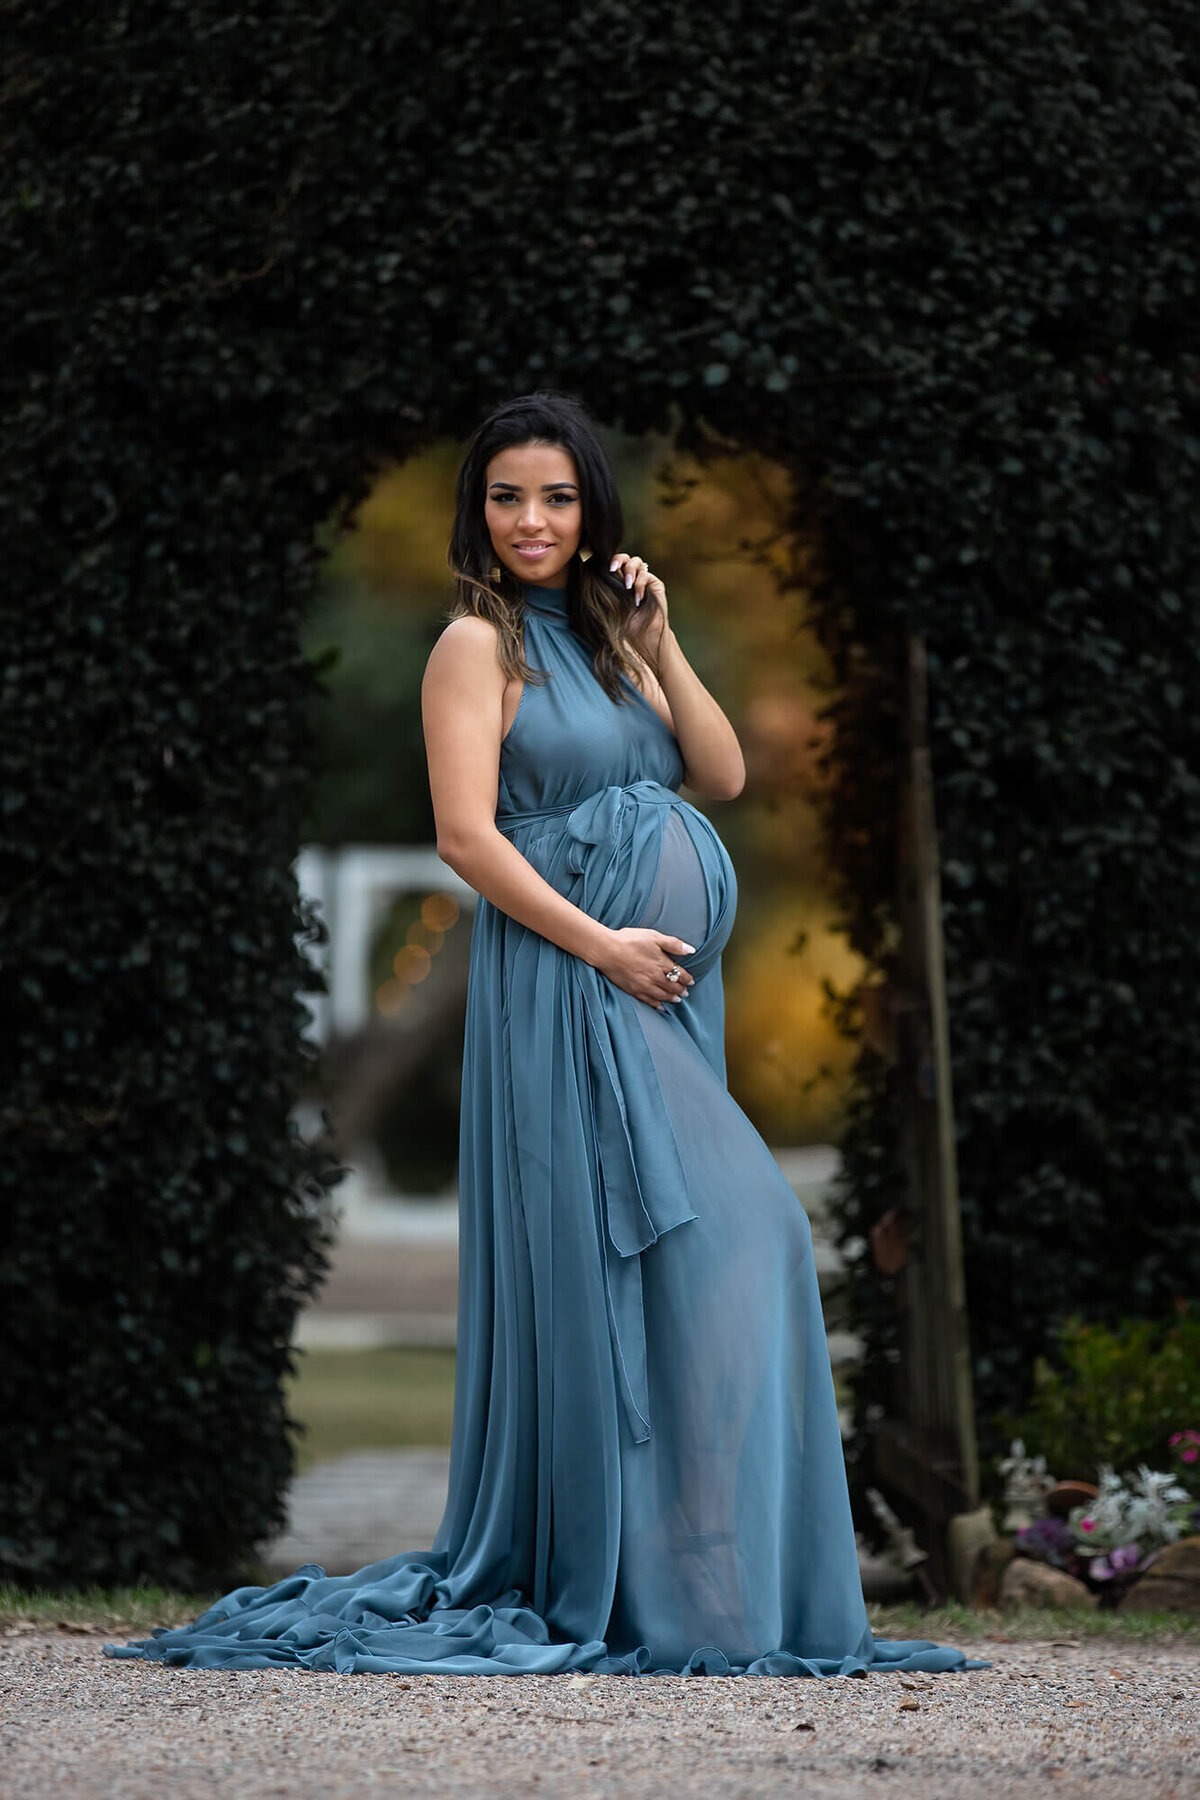 Maternity model wearing a beautiful blue dress posing under a green arch